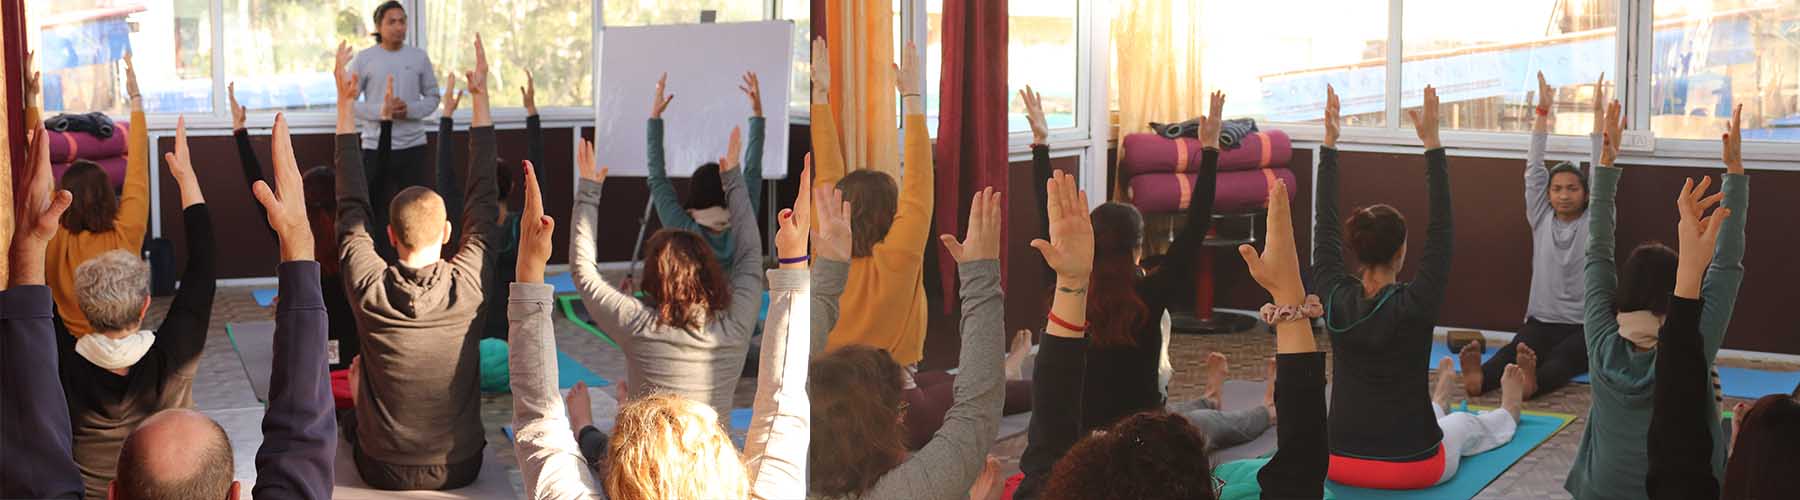 Spiritual School of Yoga retreat group